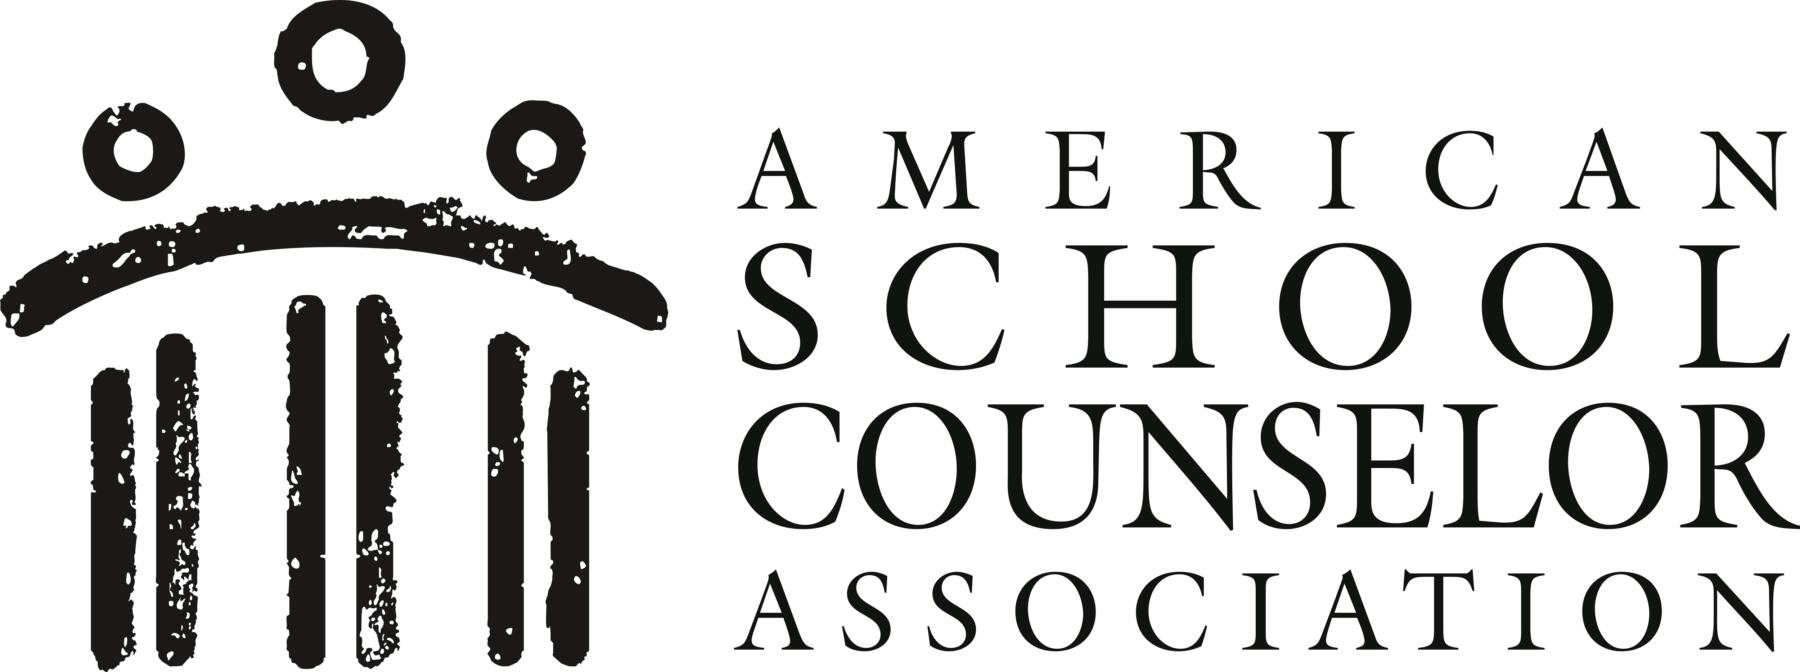 American School Counselor Association - Professional Associations - JobStars USA